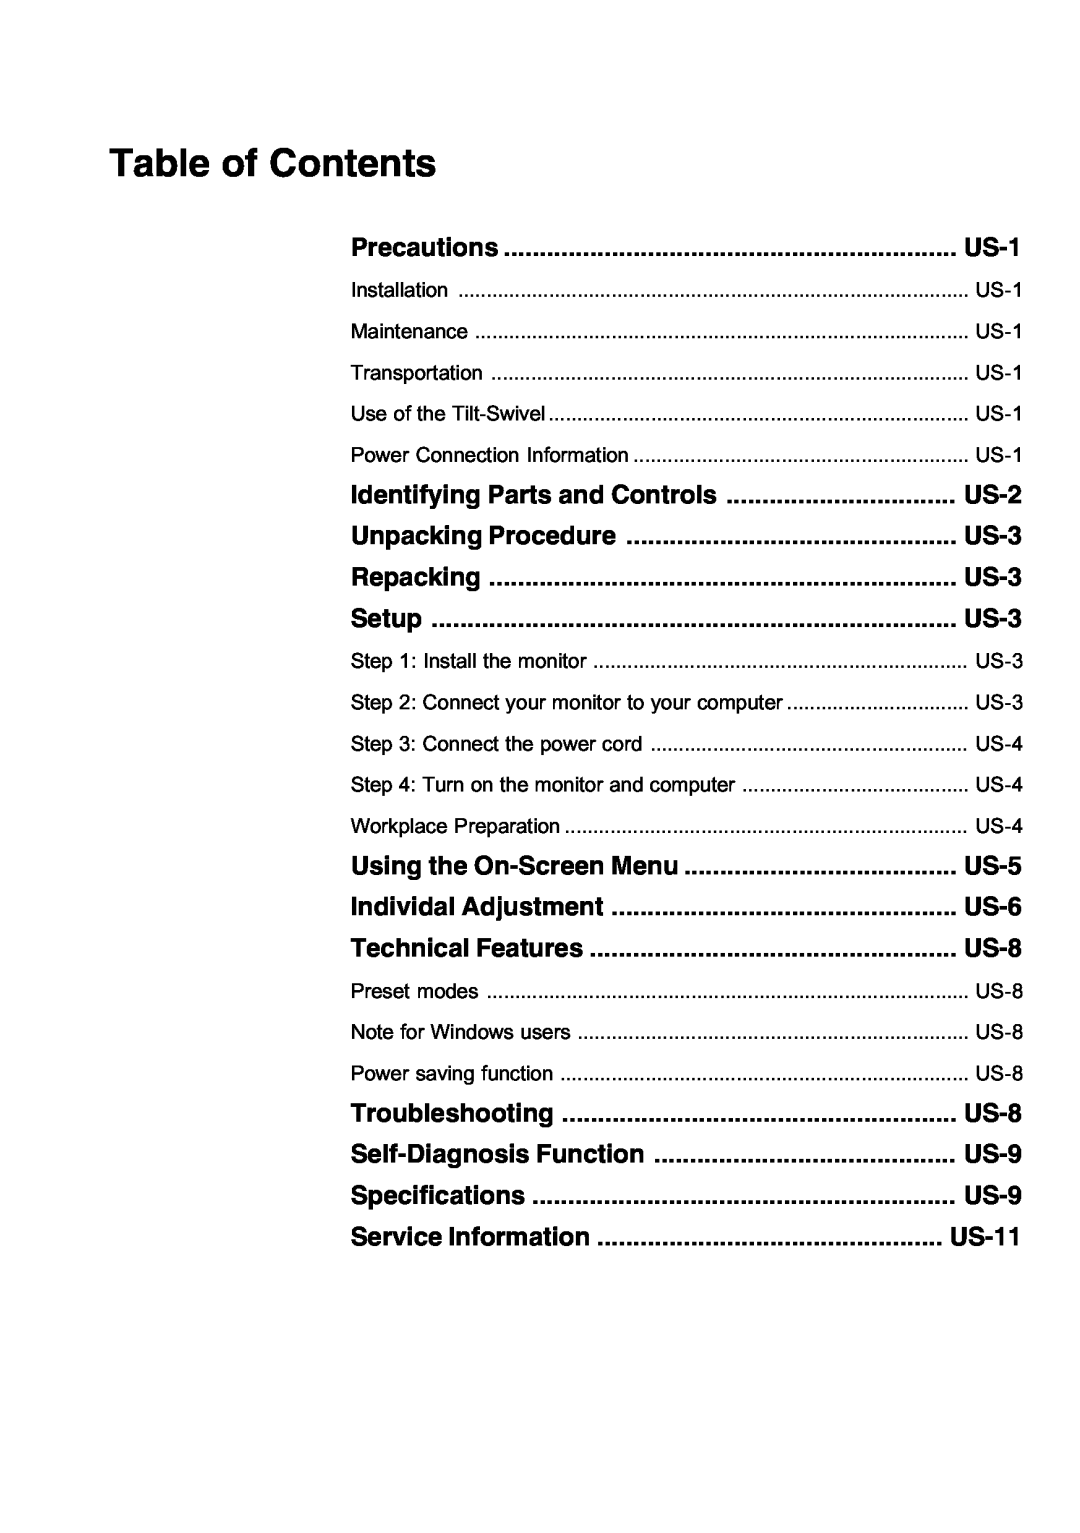 Lenovo E74 manual US-2, US-3, US-5, US-6, US-8, US-9, US-11, Table of Contents 